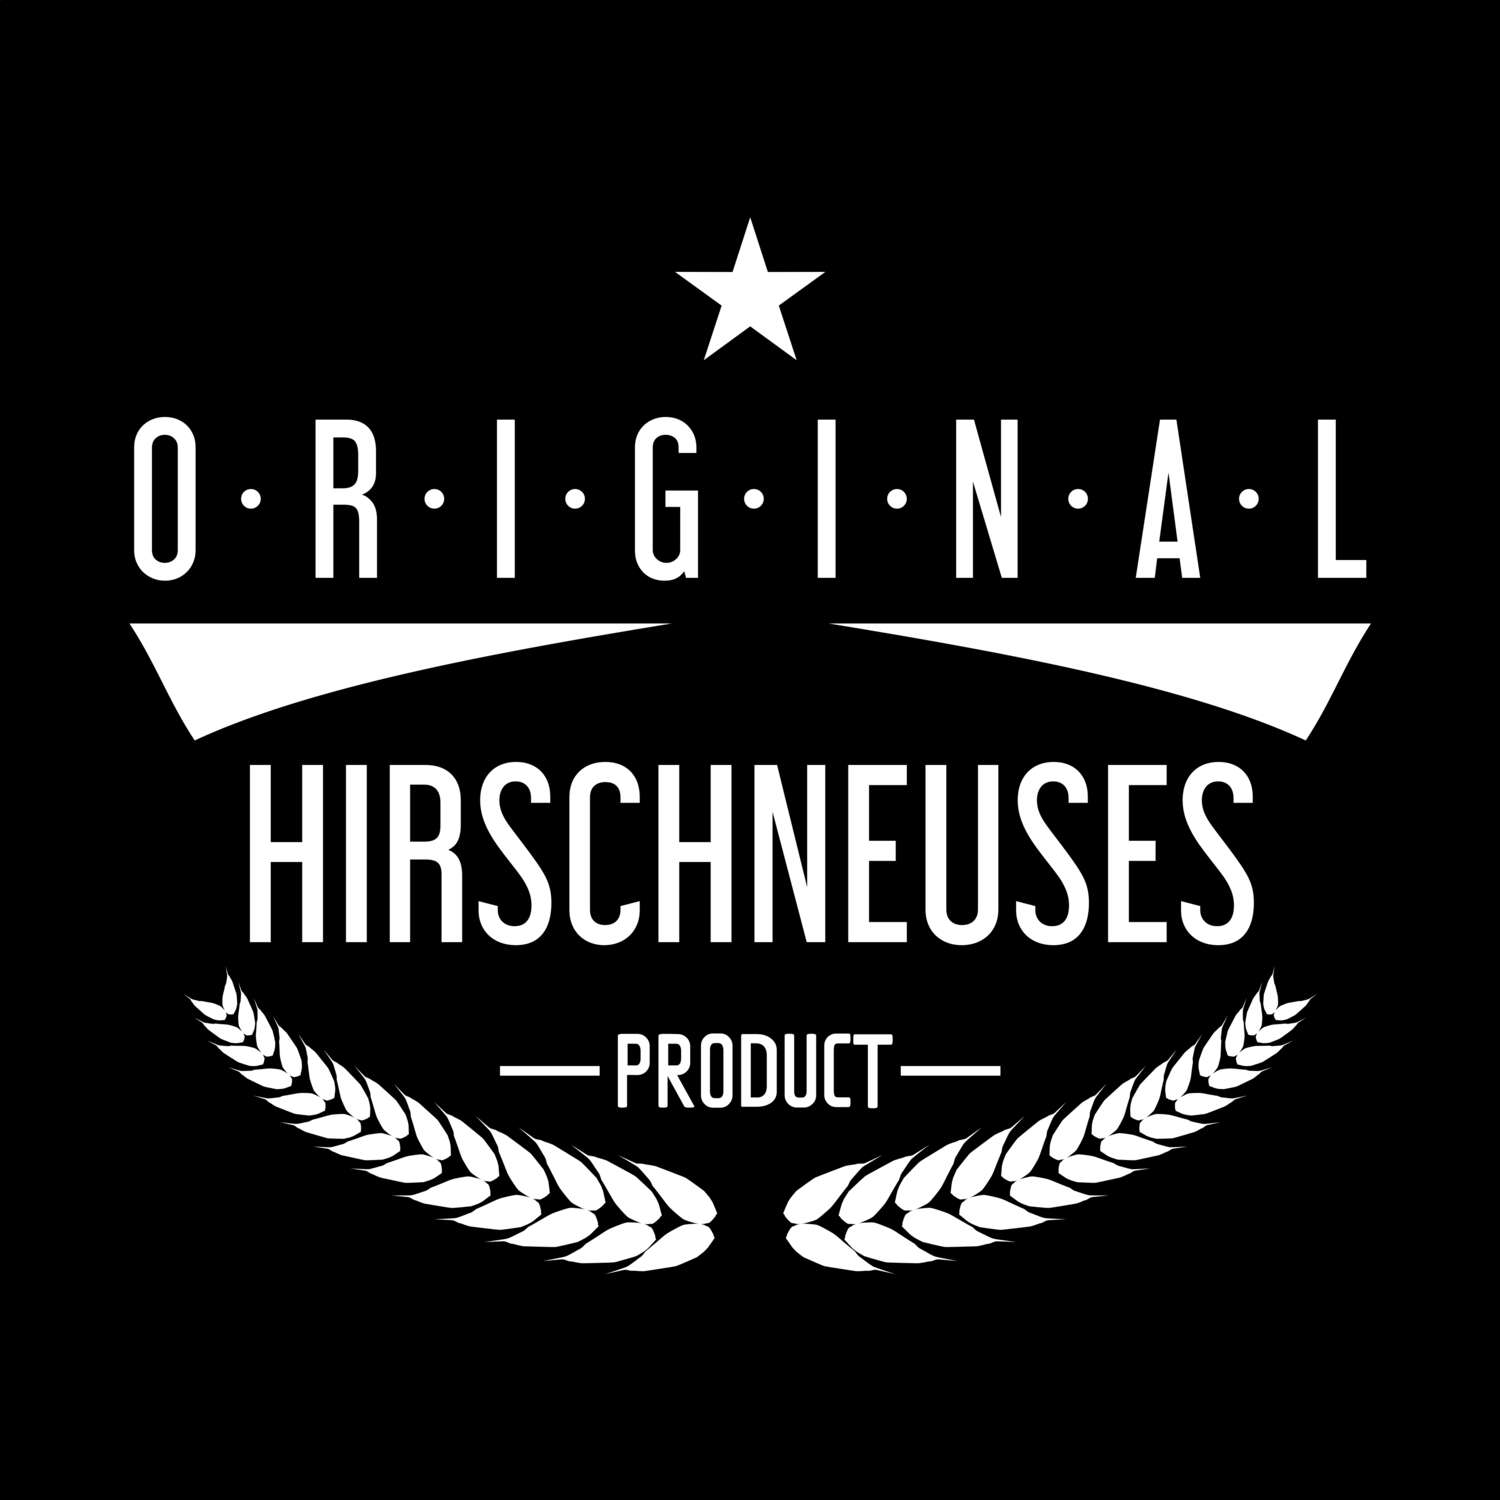 Hirschneuses T-Shirt »Original Product«